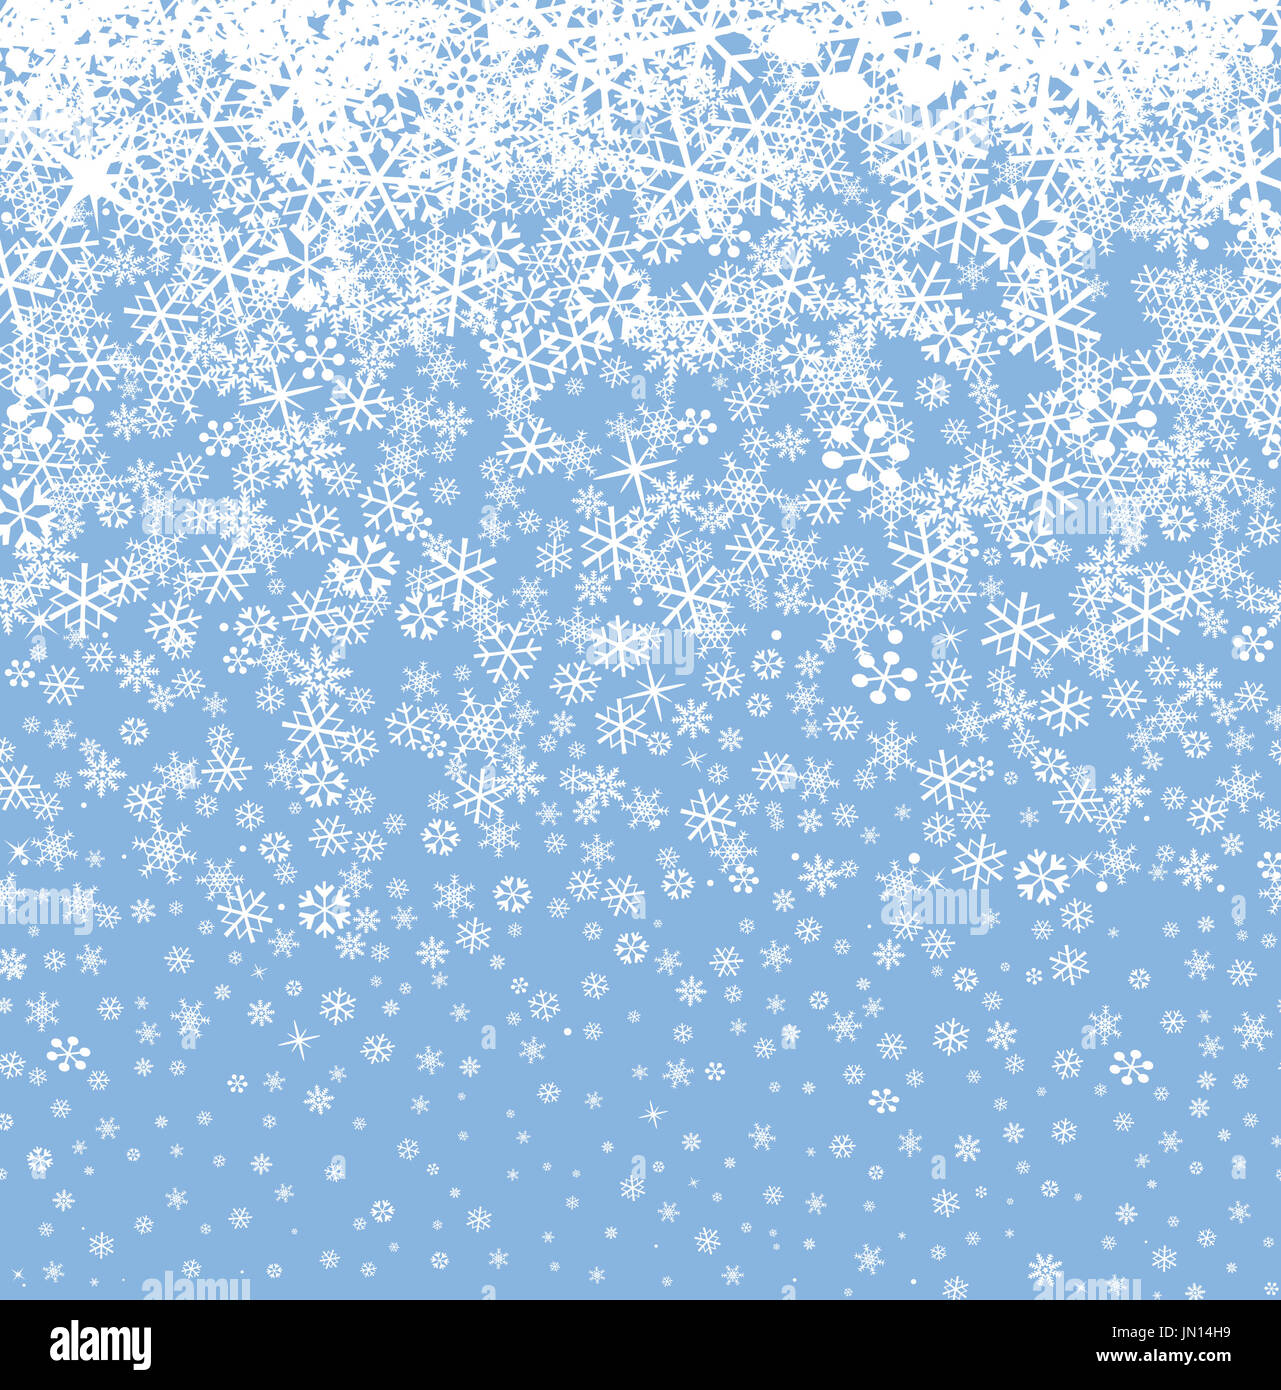 Snow background Snowflakes seamless pattern Winter snowy